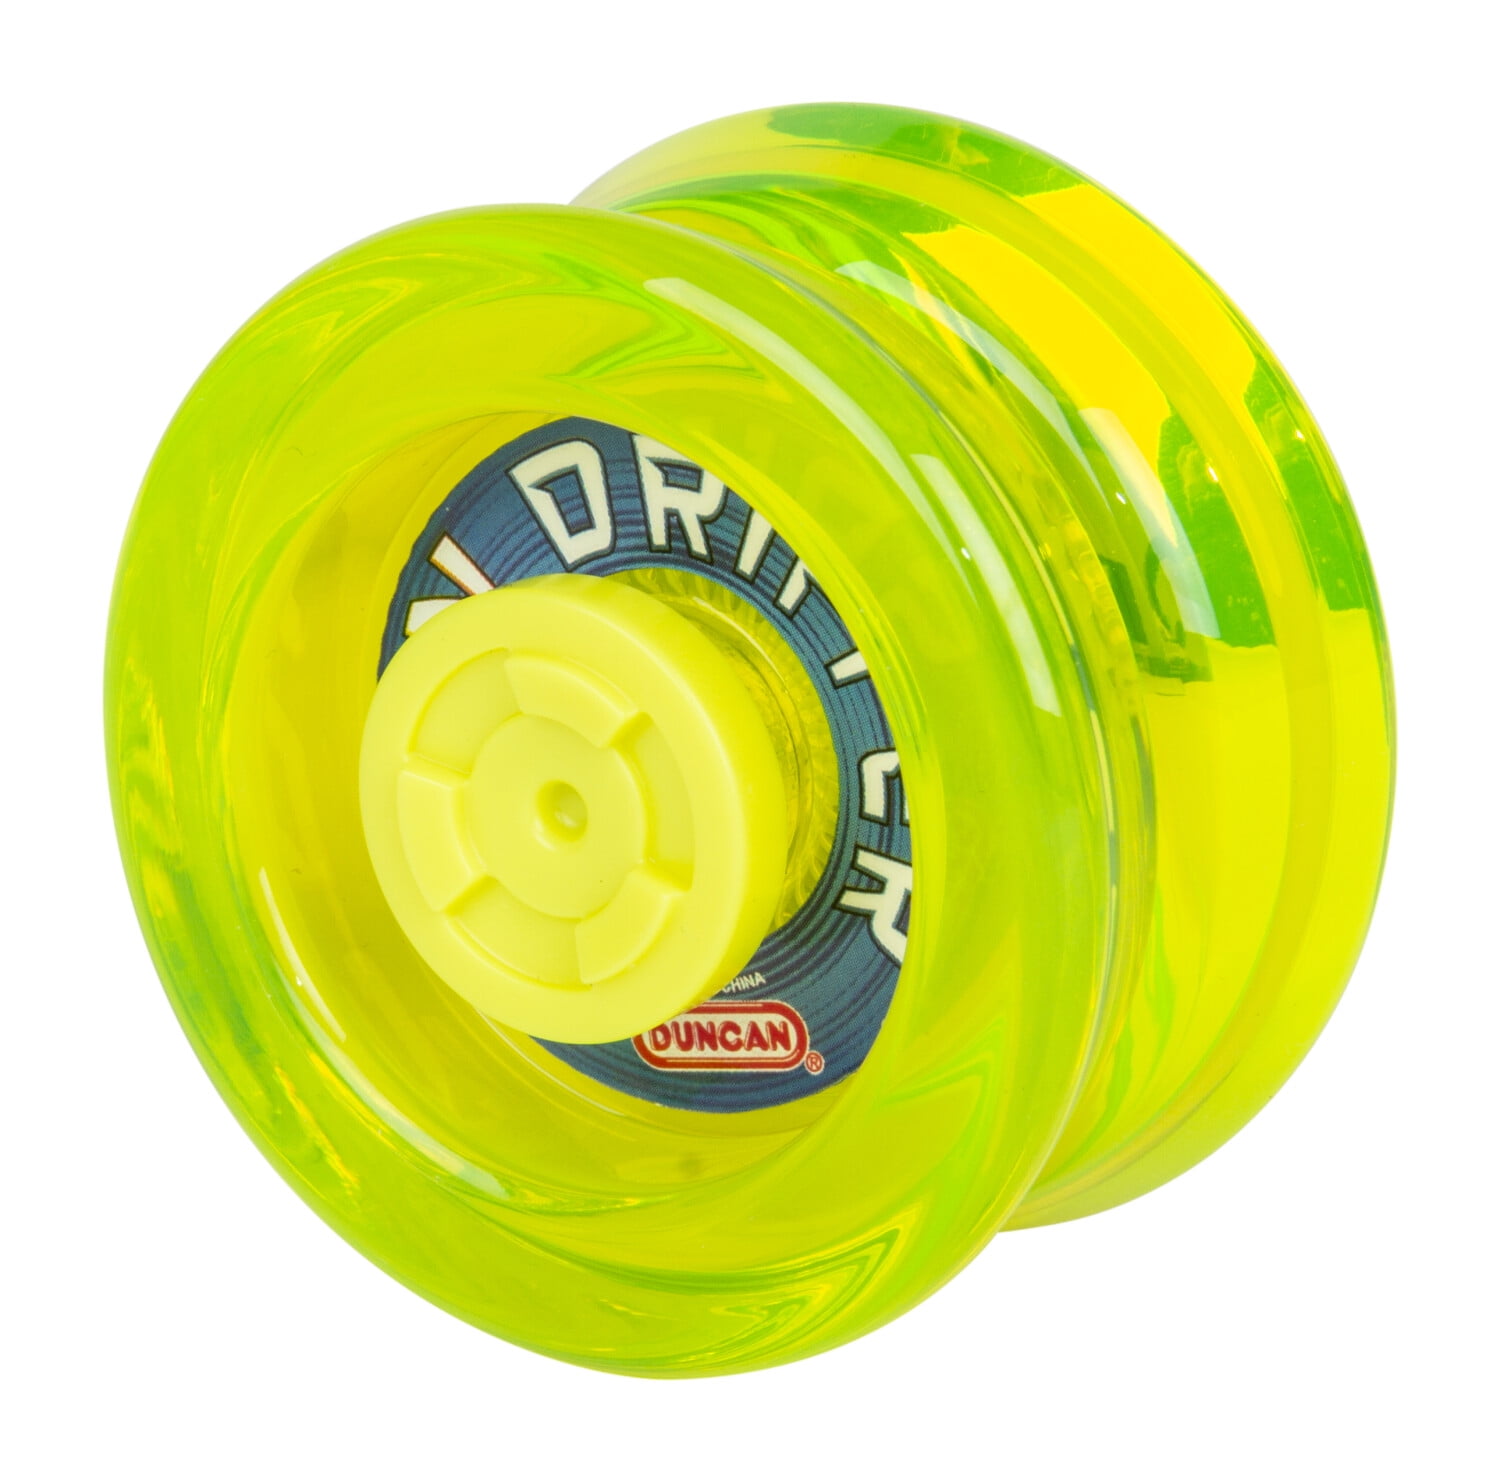 Side-Spinning Yo-Yo Duncan Toys Spin Drifter Yo-Yo Yellow/Green 1 Yo-Yo Beginner to Advanced 